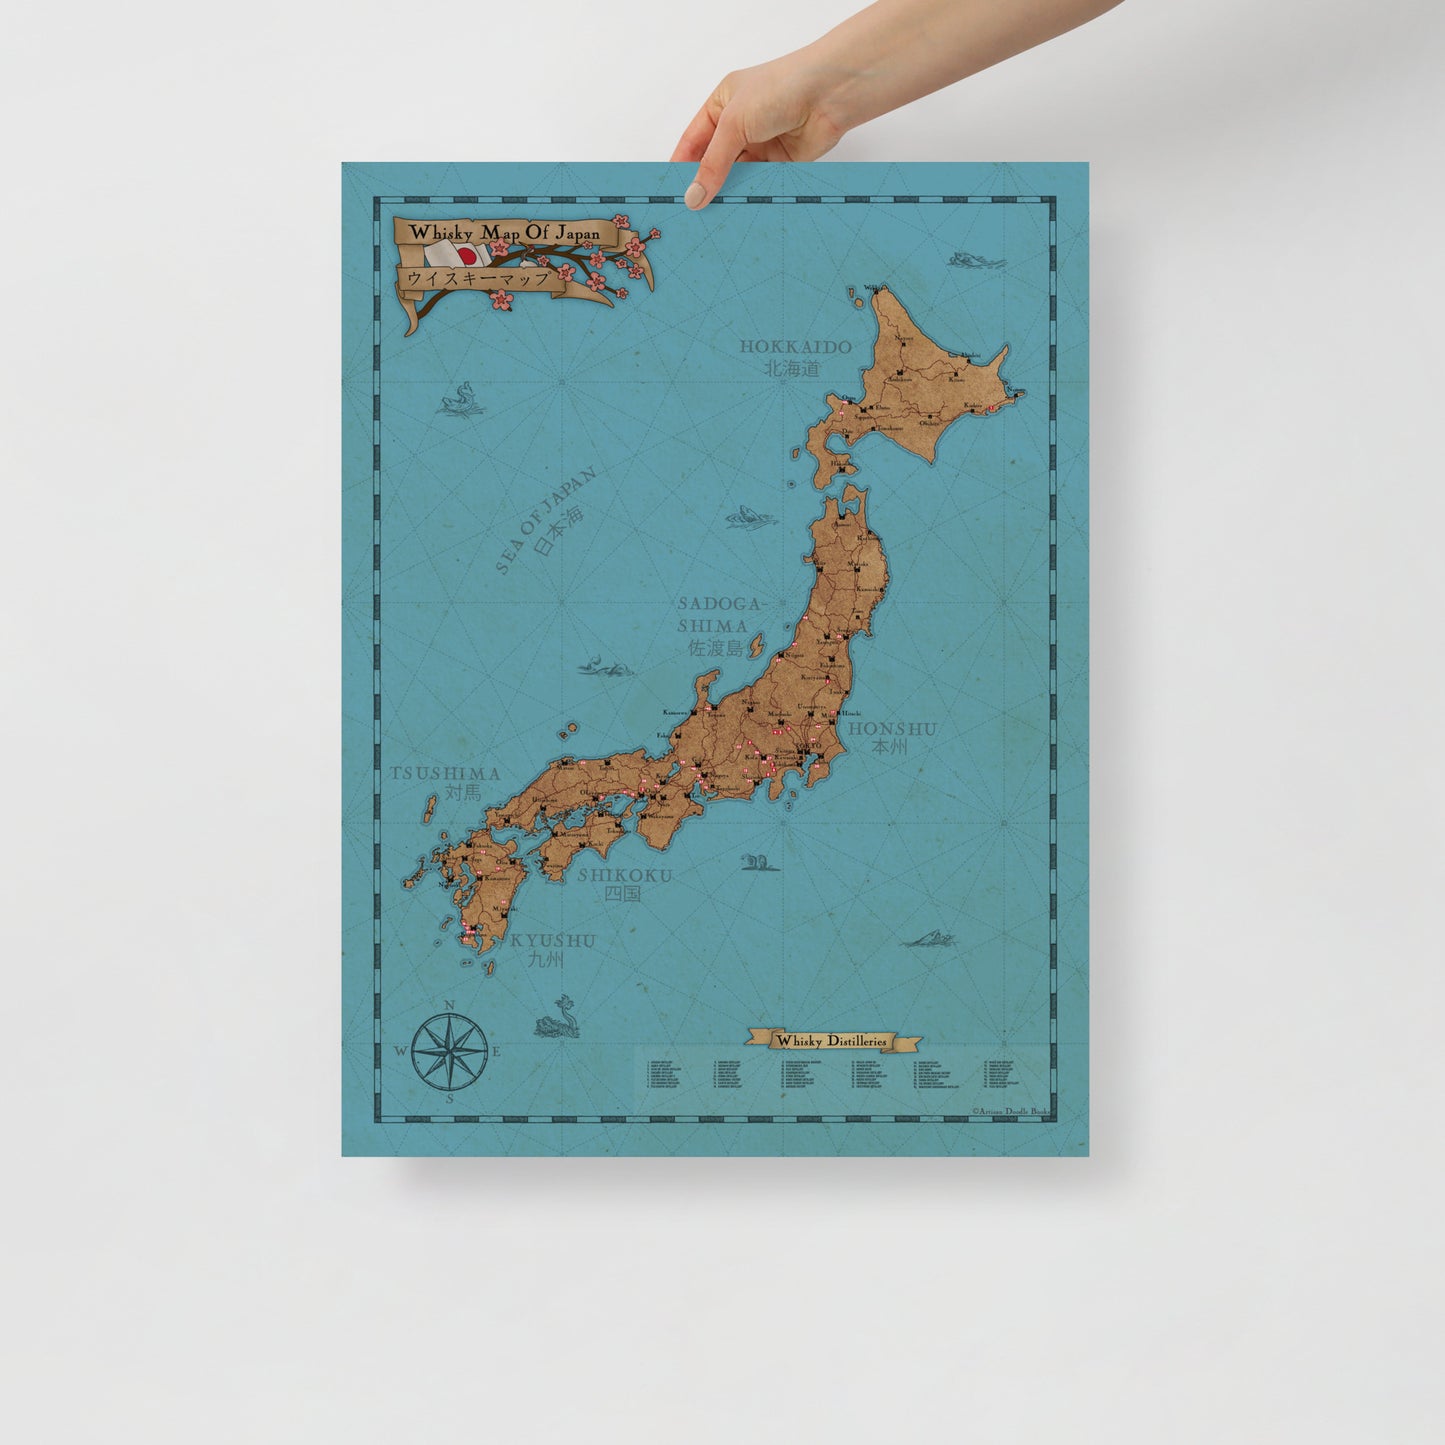 Whisky Map of Japan - Art Print